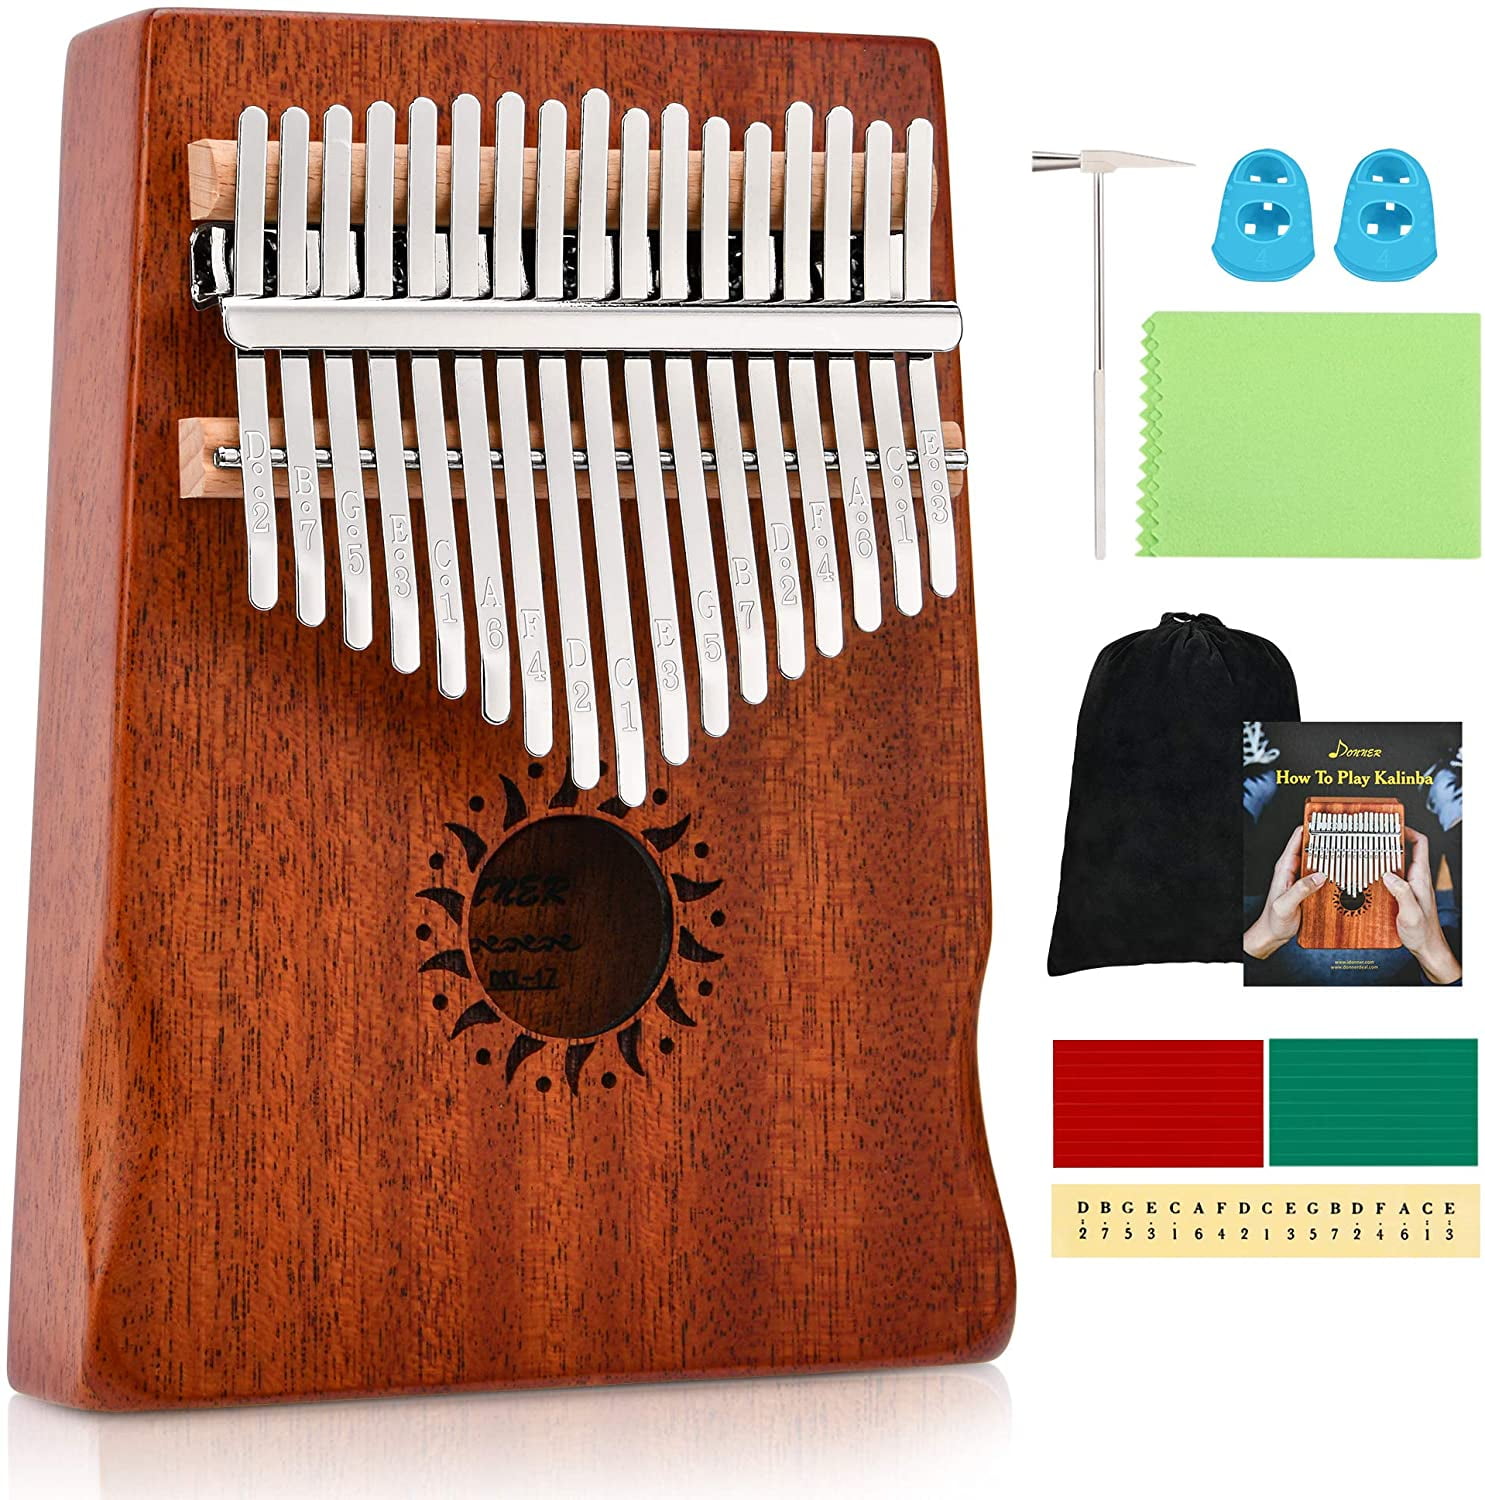 Kalimba Thumb Piano 17 Keys Portable Mbira Finger Piano Gifts for Kids and Adults Beginners 